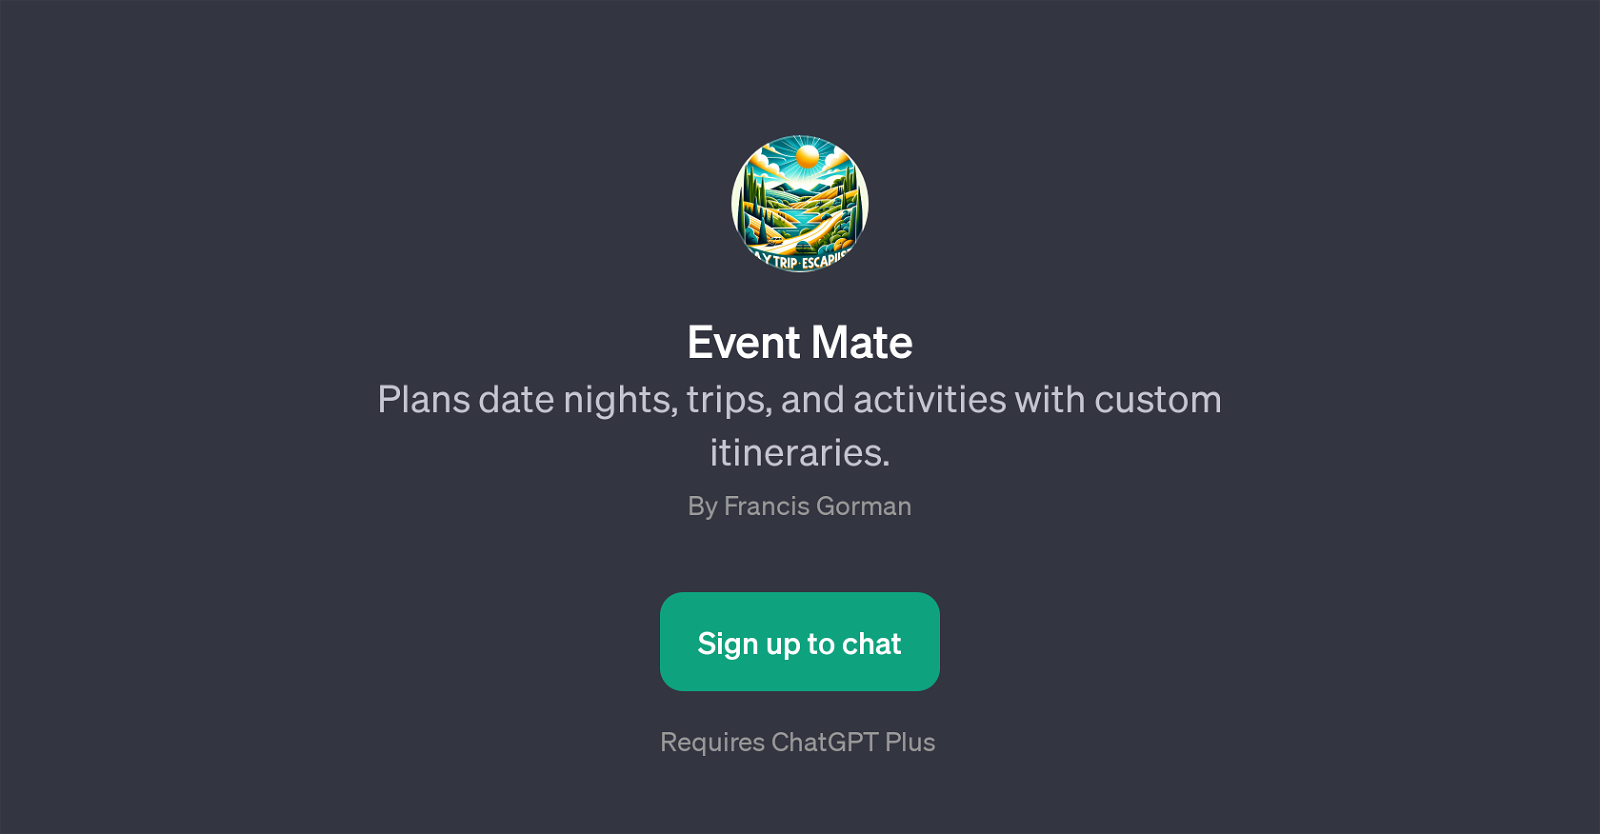 Event Mate website